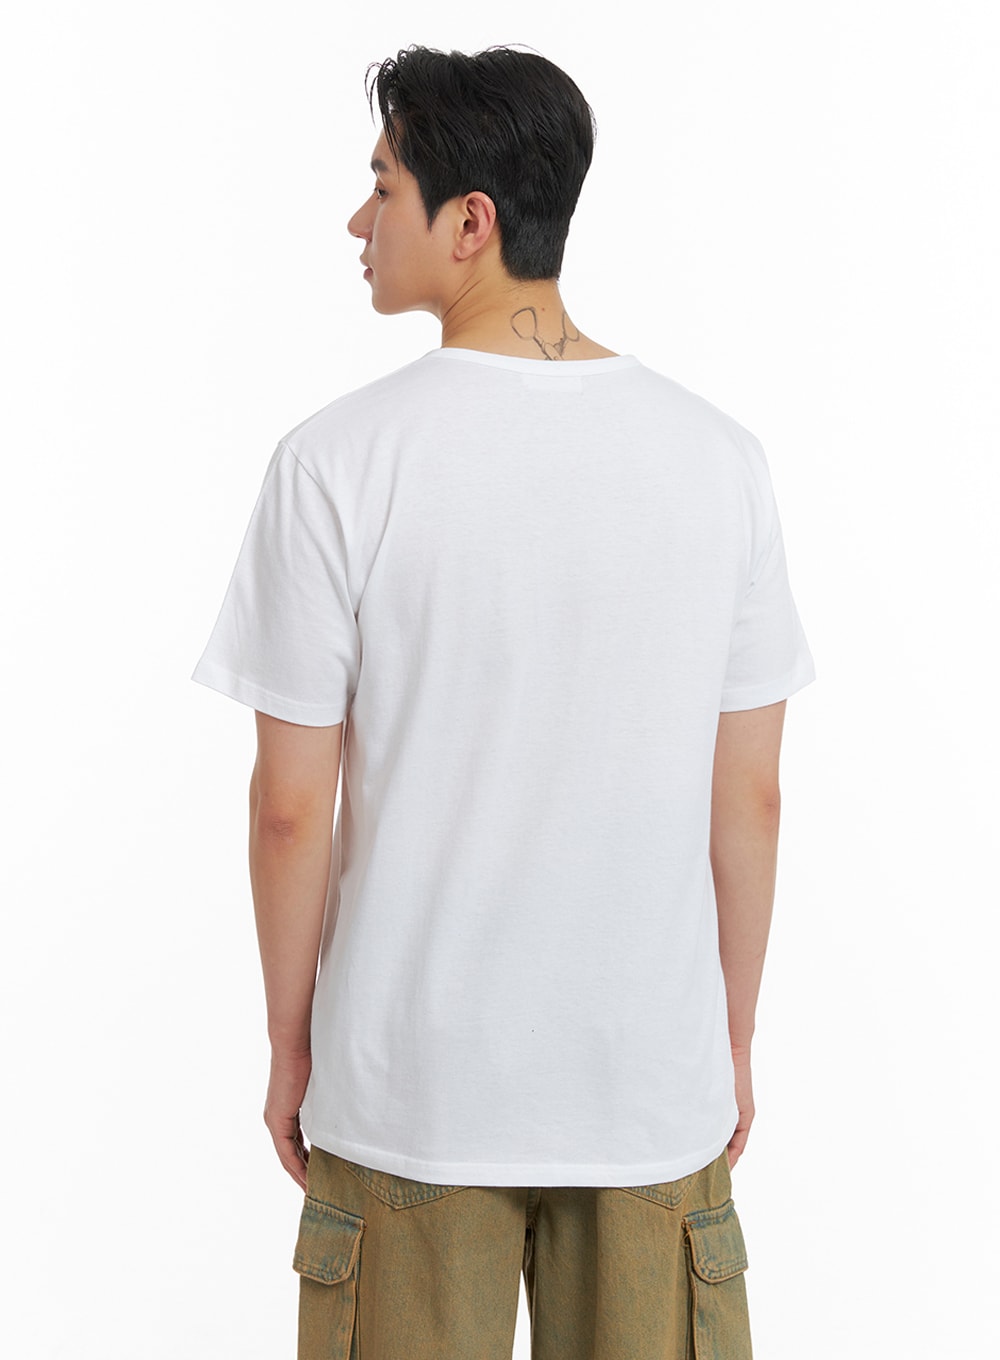 mens-quarter-button-up-cotton-t-shirt-ia401